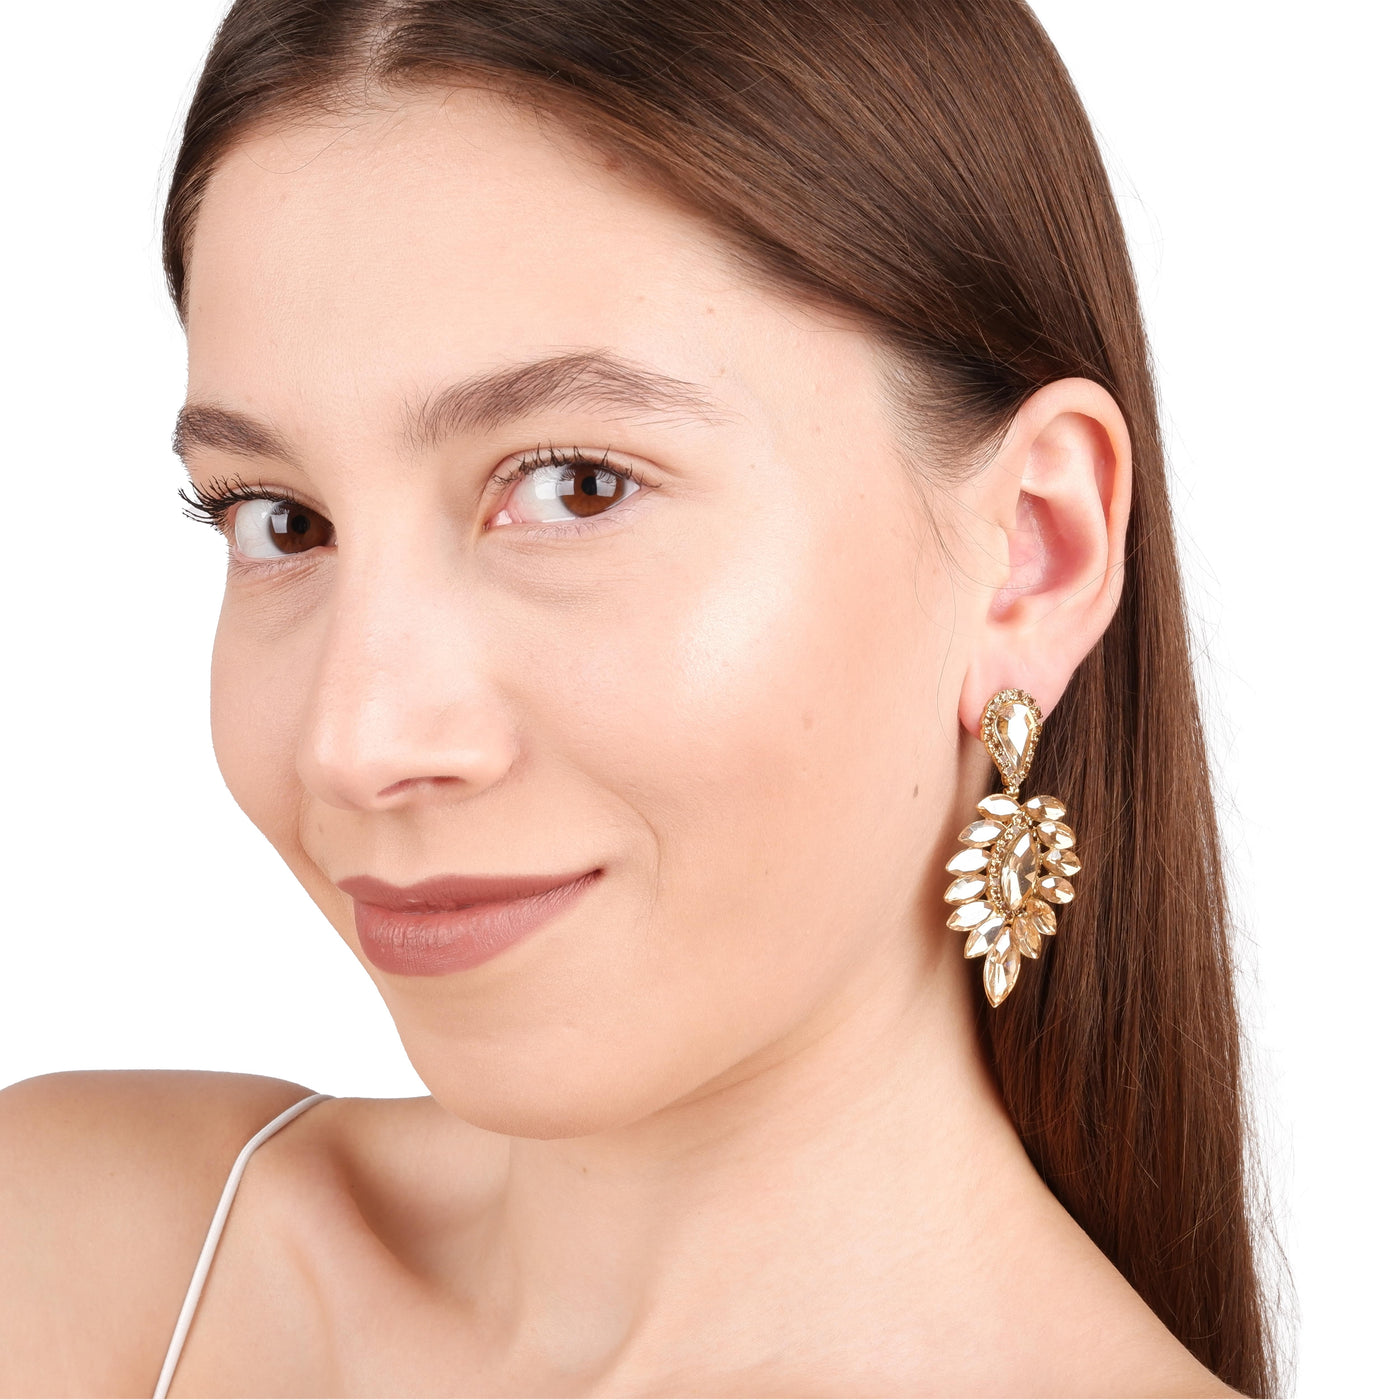 Drop Model Crystal Stone Bridal Earrings for Prom and Wedding Crystal Glass Stone Bridal Earrings Silver